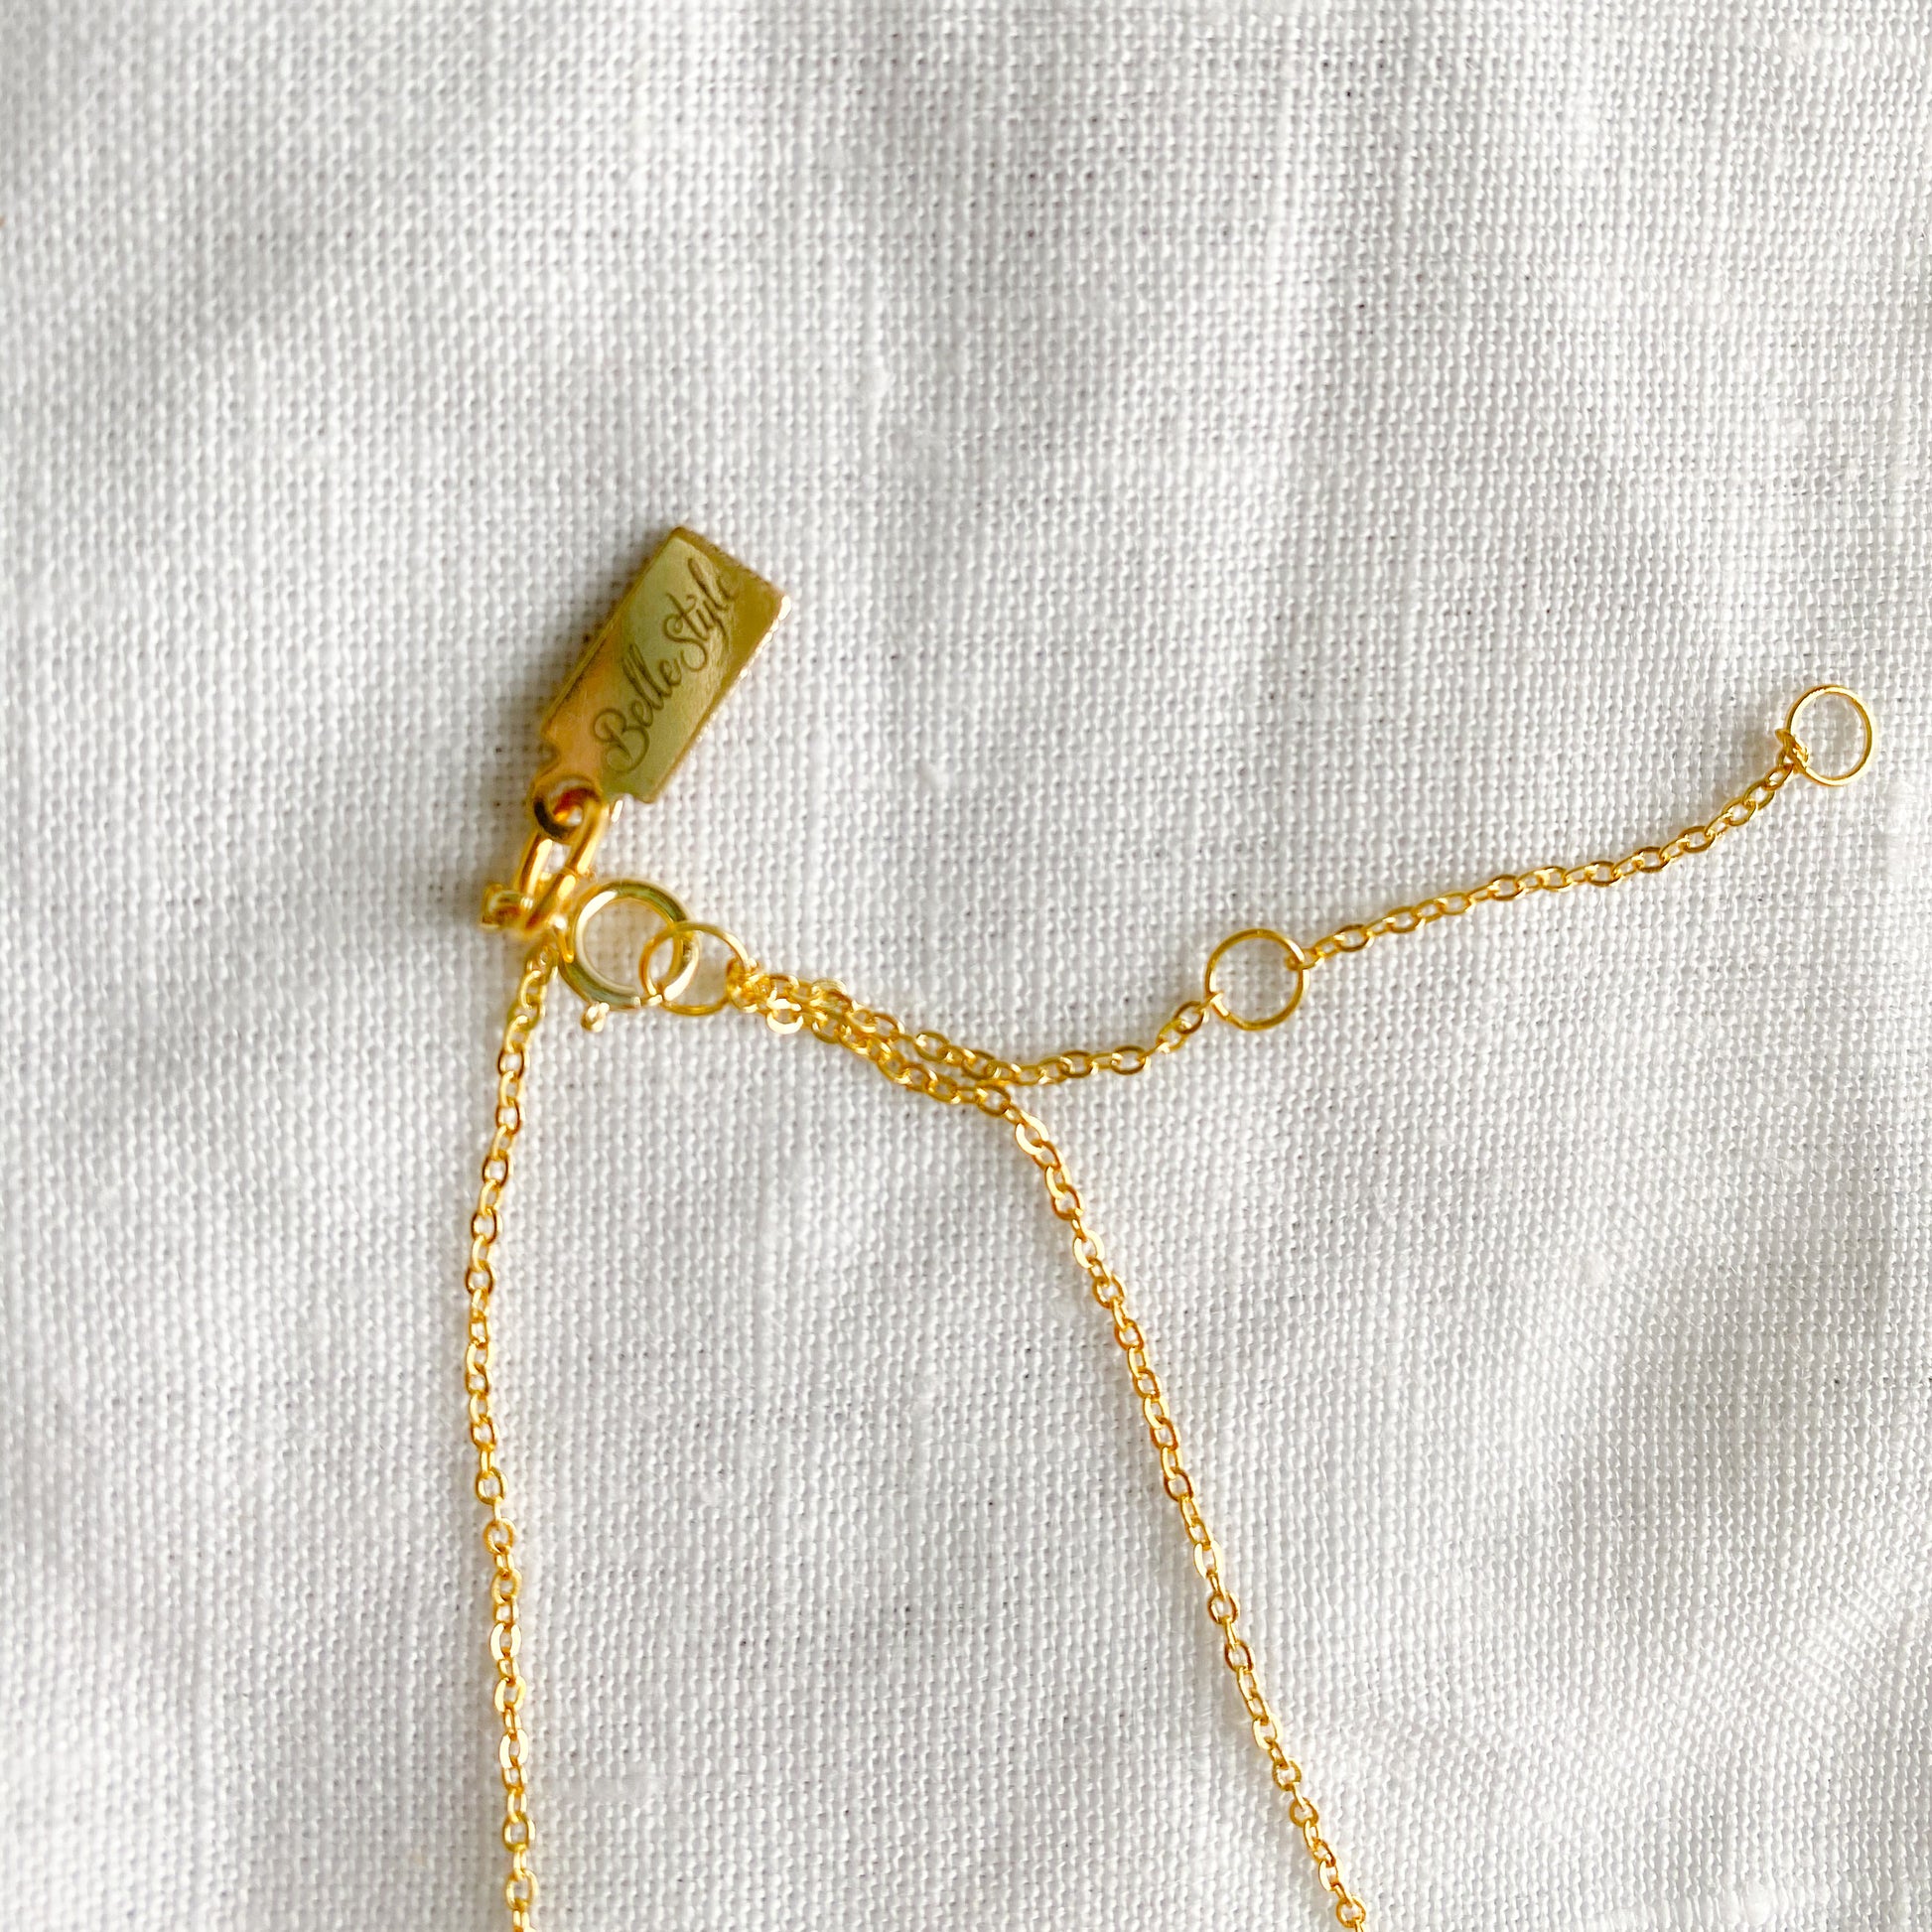 Sunbeam Gold Crystal Necklace - BelleStyle